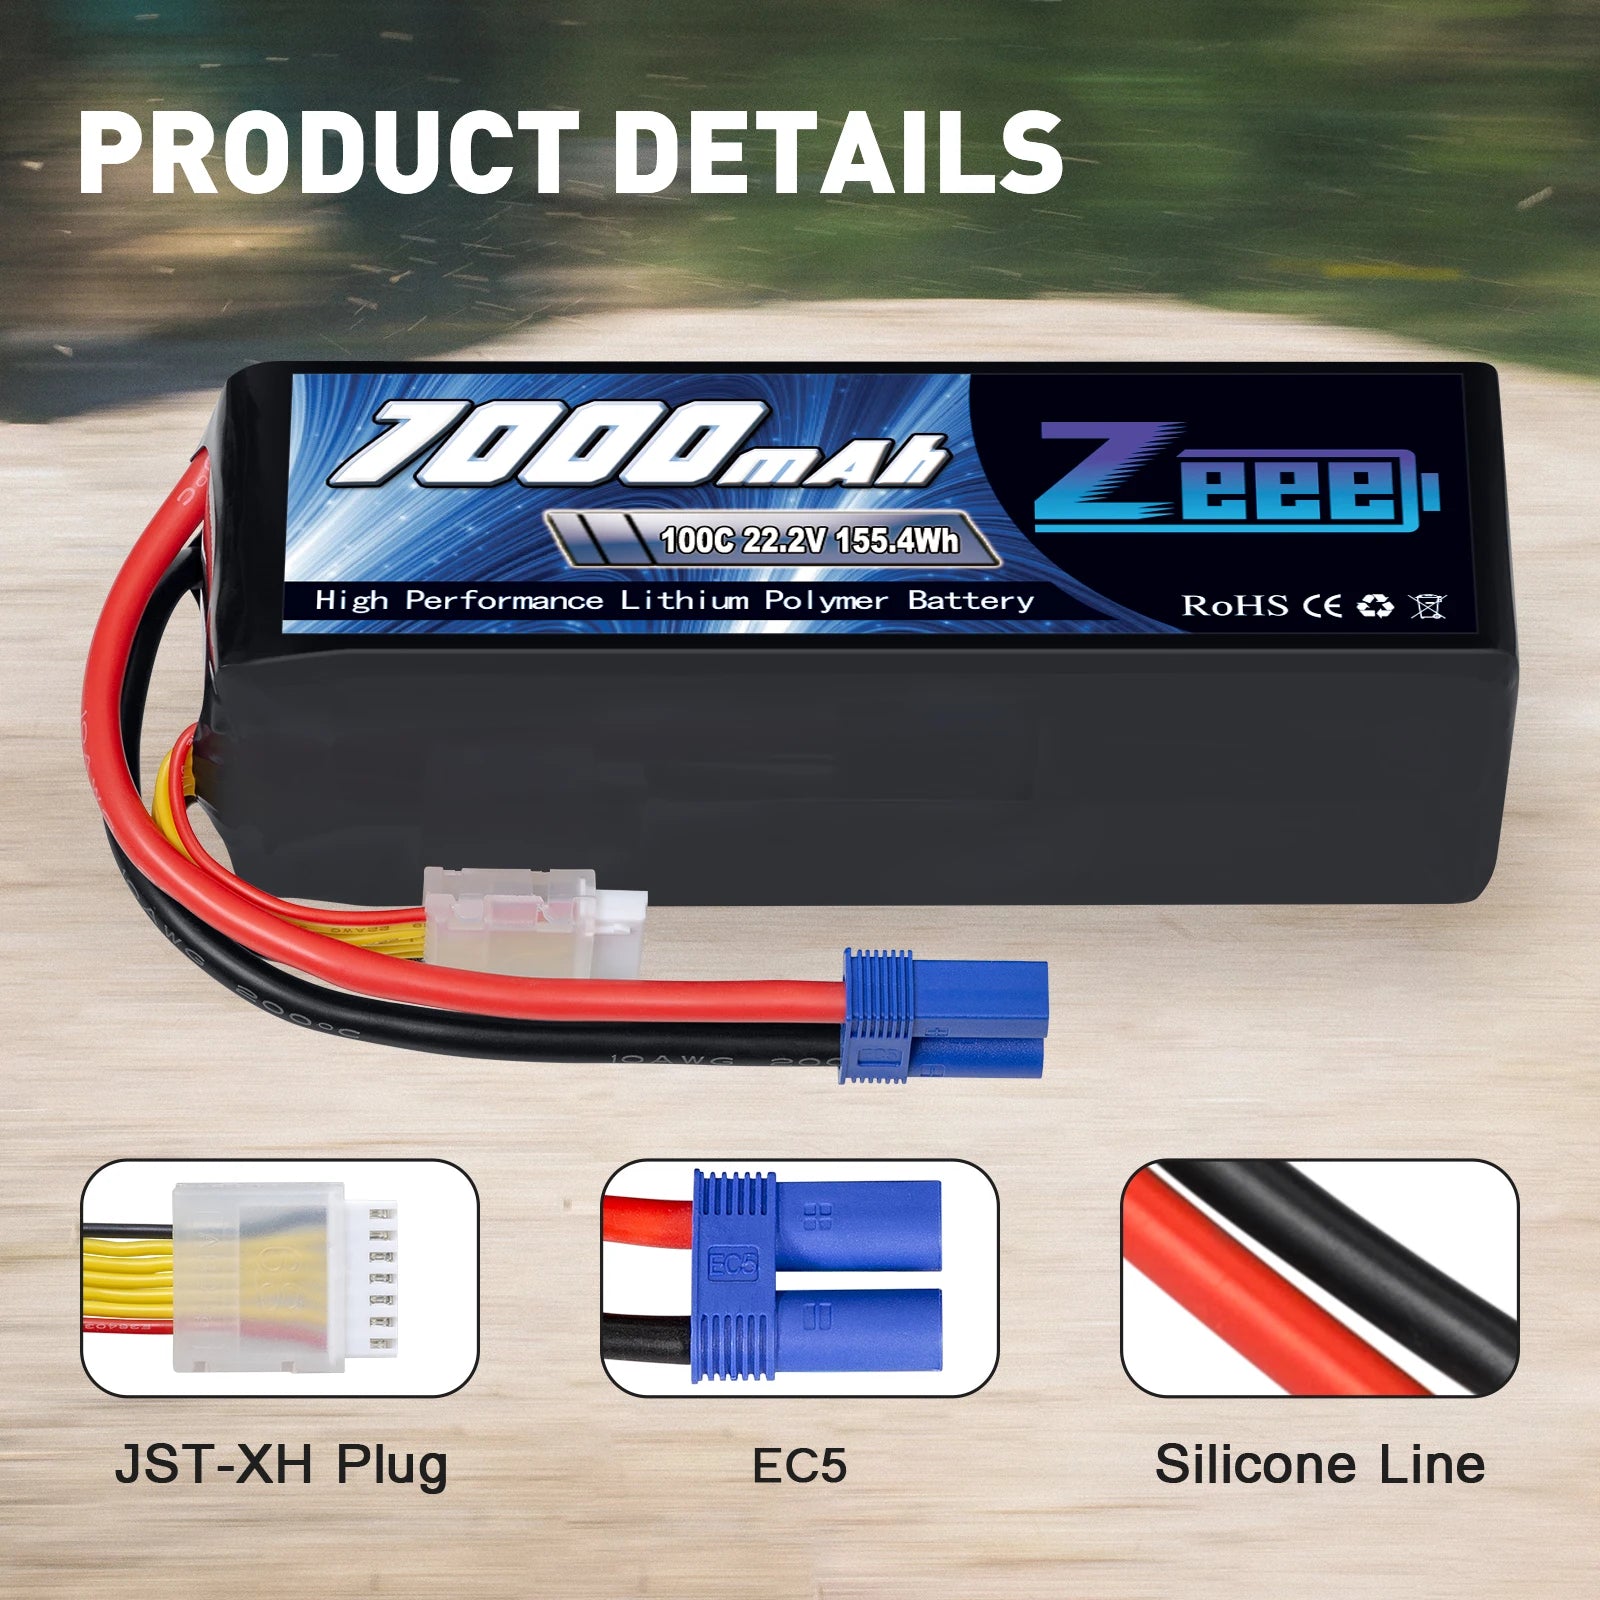 2Units Zeee Lipo Battery, FLUAID P@D 100C 222V 955.4Wh High Performance